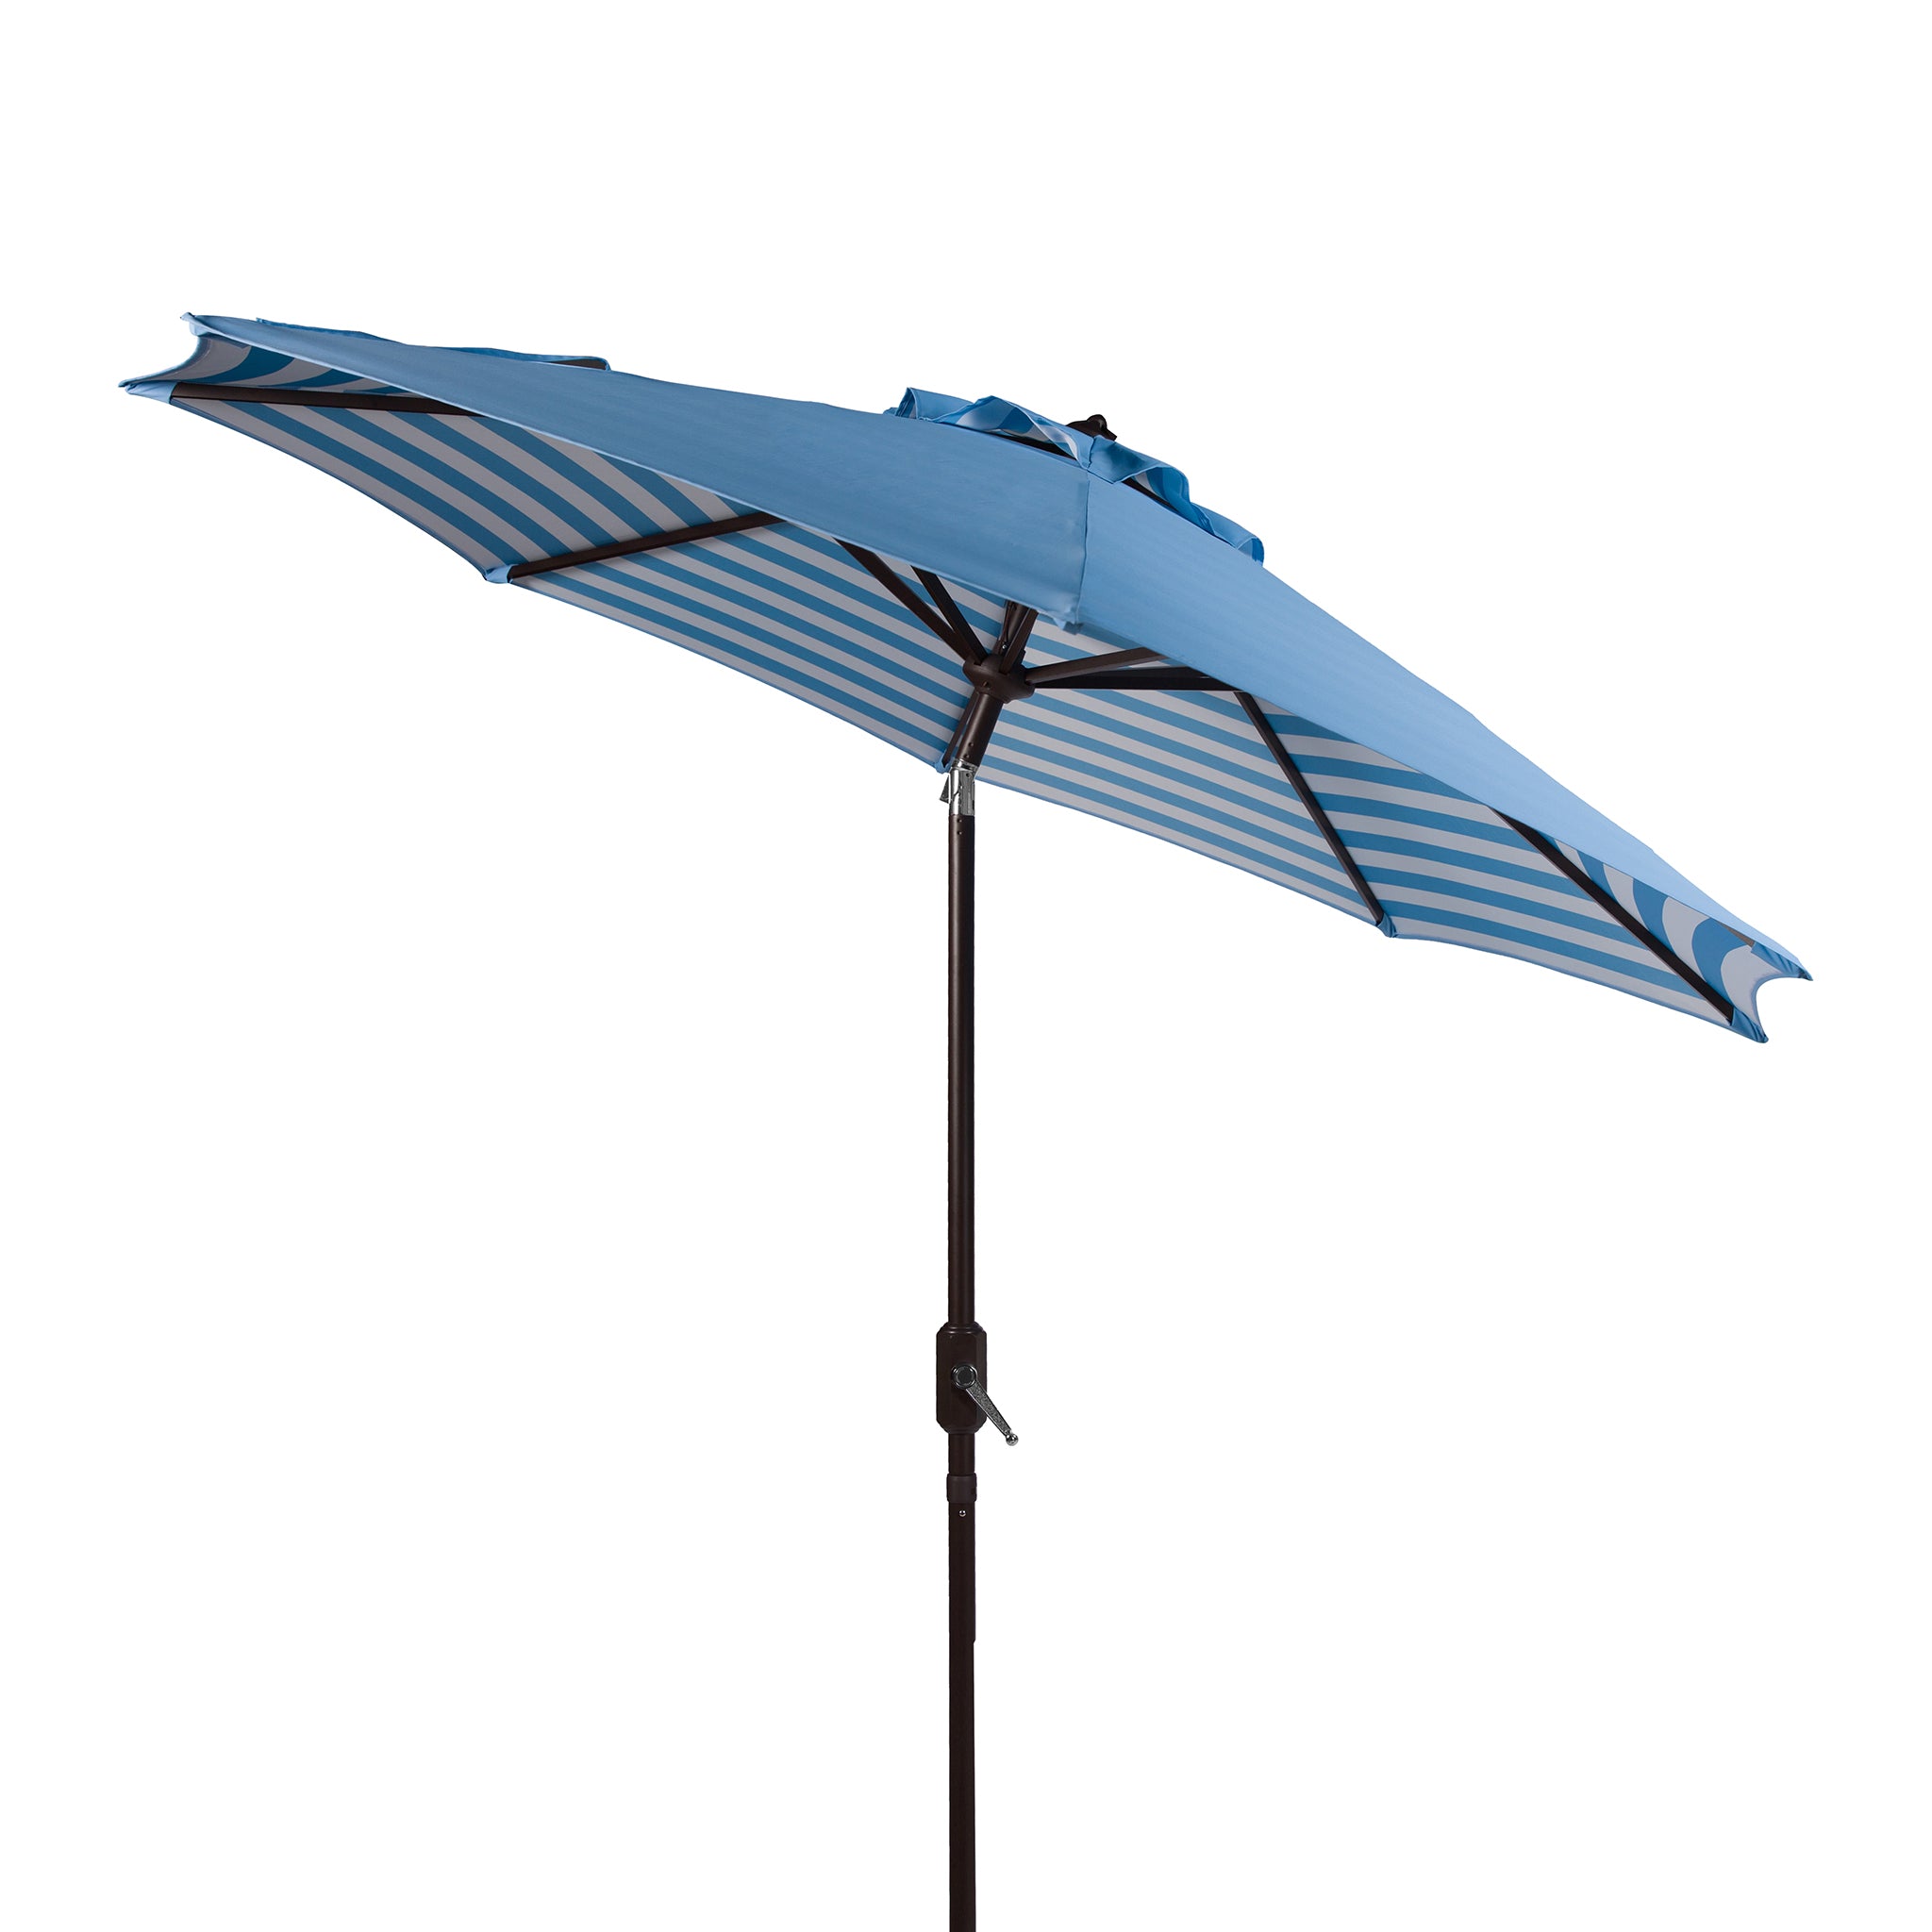 Novotel Auto Tilt Umbrella